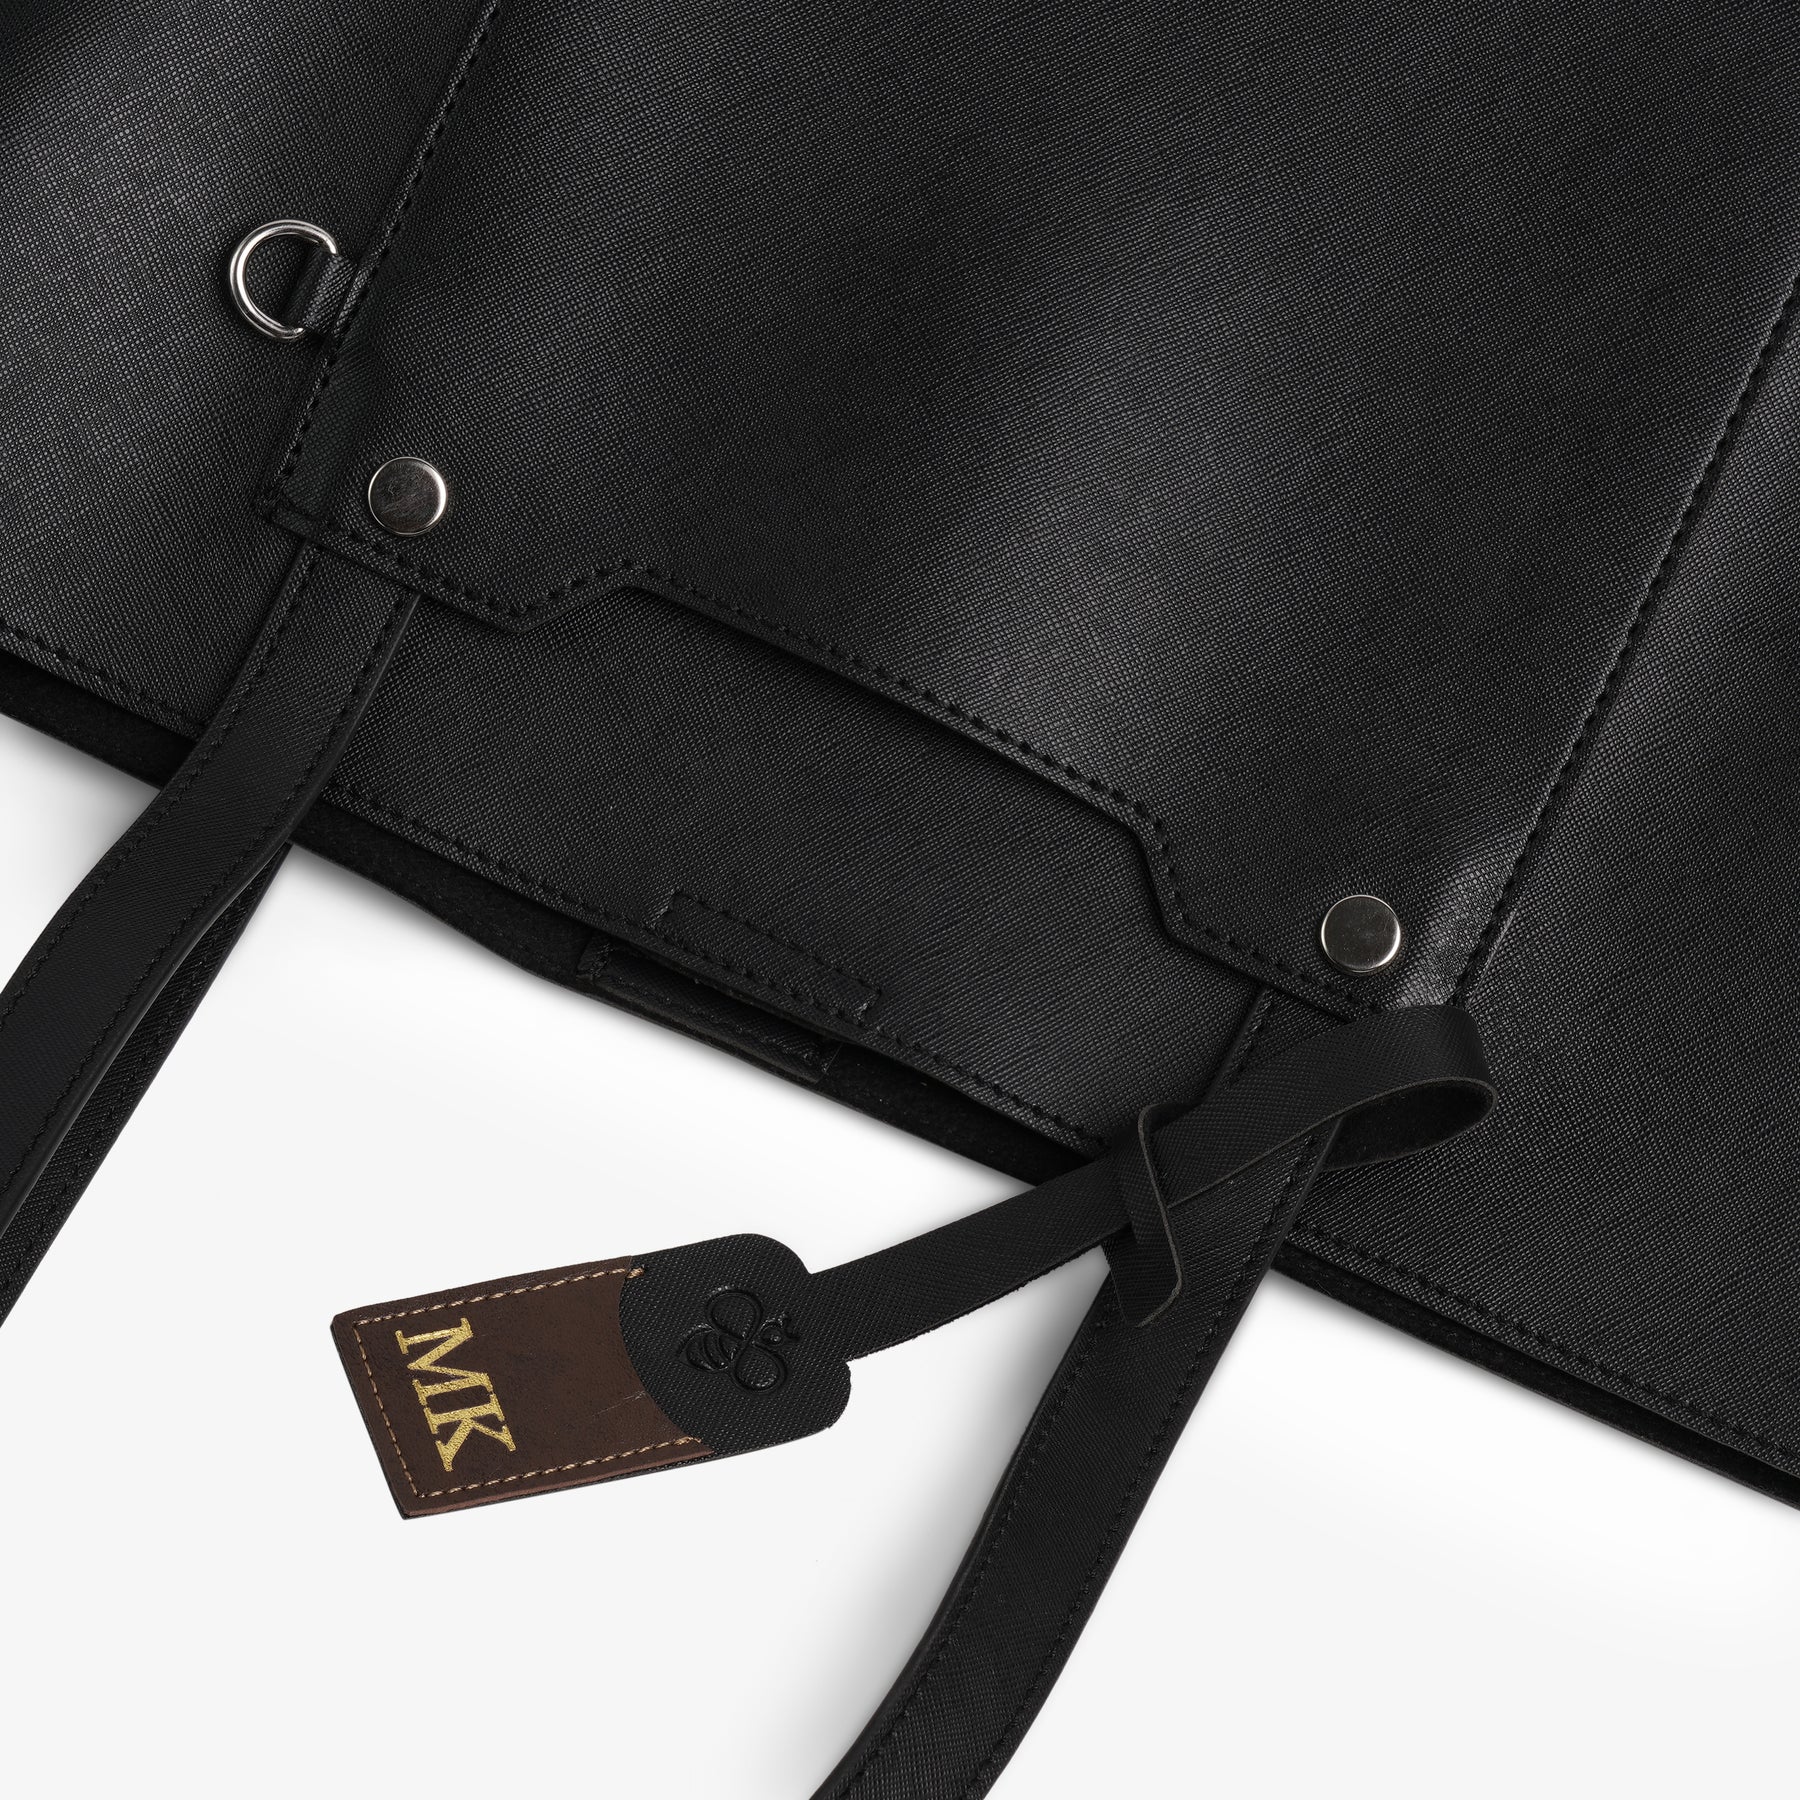 Cooperative Structured Mini Tote Bag in Black